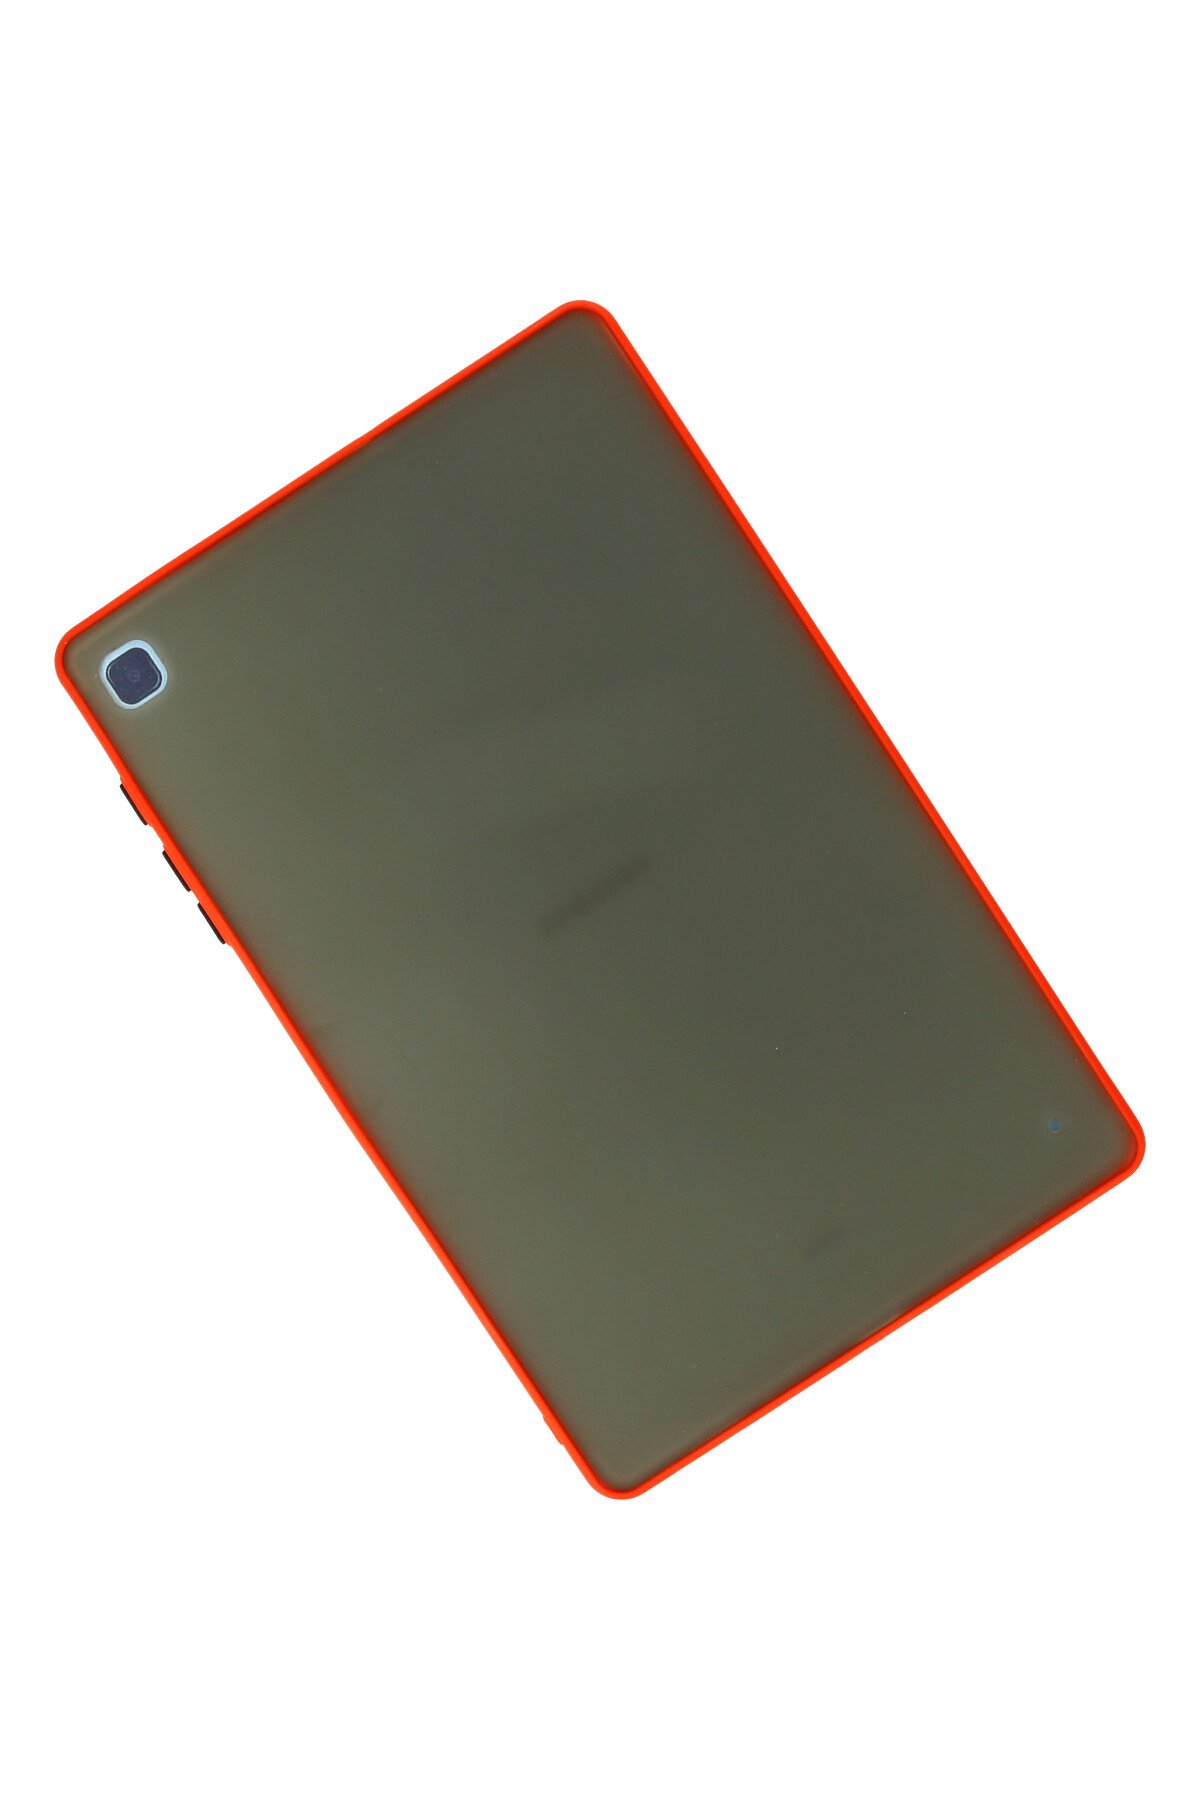 Newface Samsung Galaxy P610 Tab S6 Lite 10.4 Kılıf Like Stantlı Tablet Silikon - Kırmızı